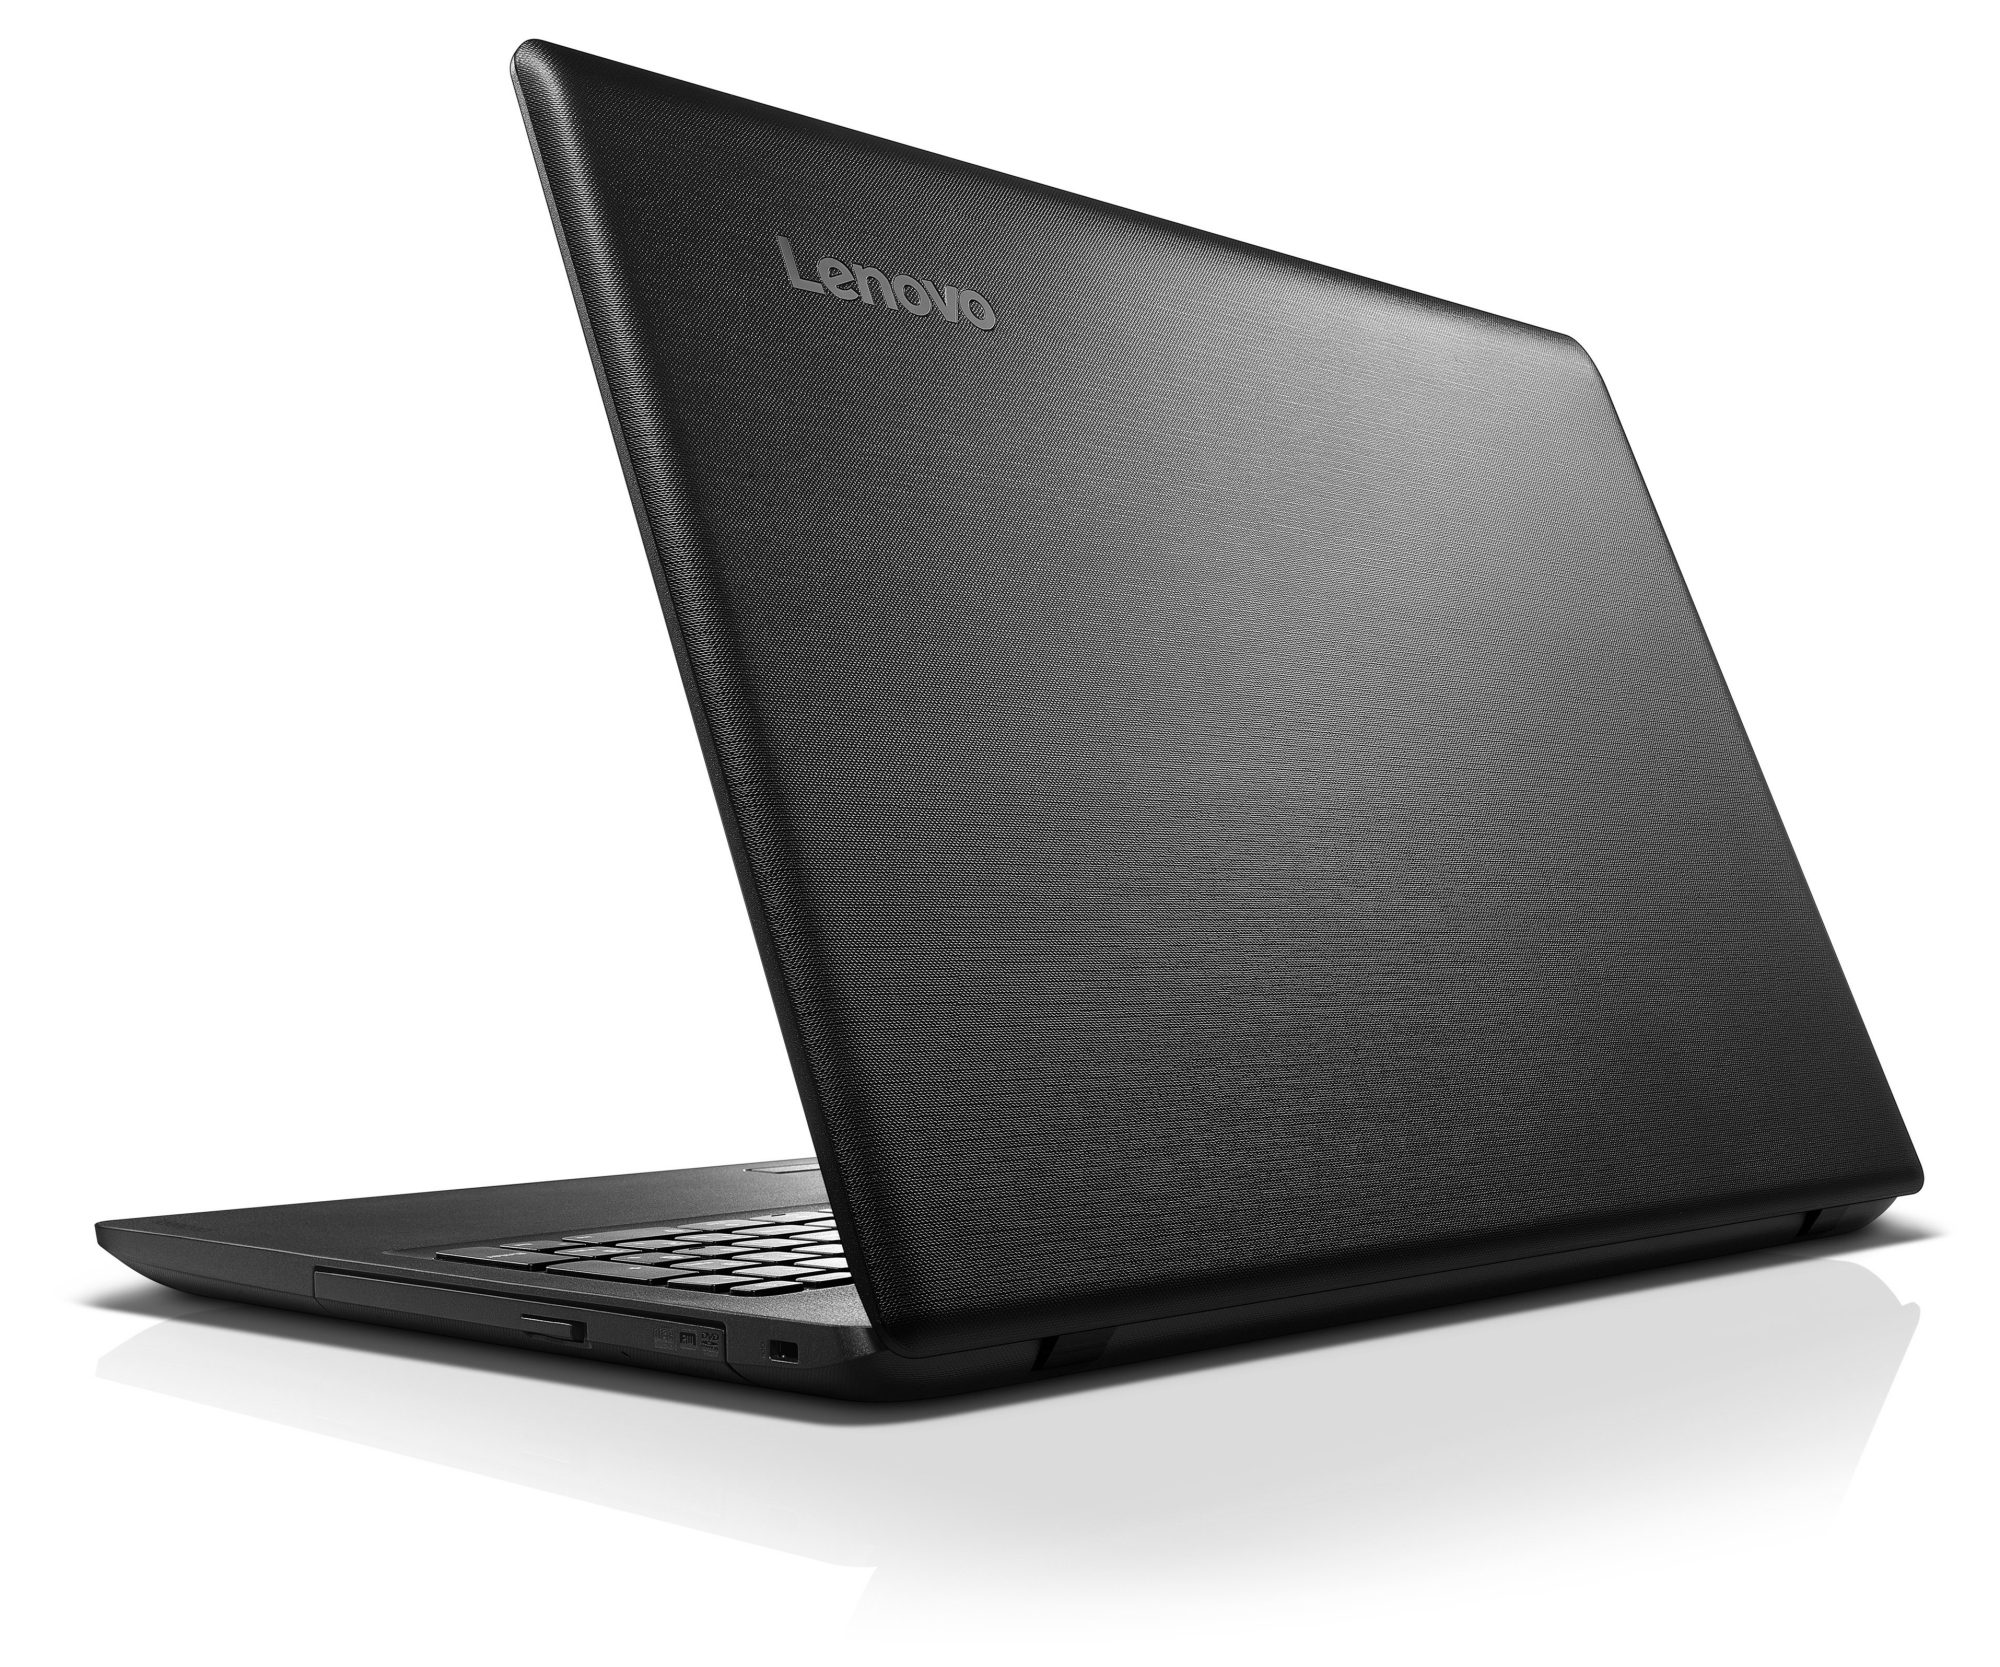 Lenovo g50 оперативная память. Lenovo IDEAPAD Flex 2. Lenovo Flex 2-14. Ноутбук Lenovo IDEAPAD g5045. Lenovo IDEAPAD g50-45.